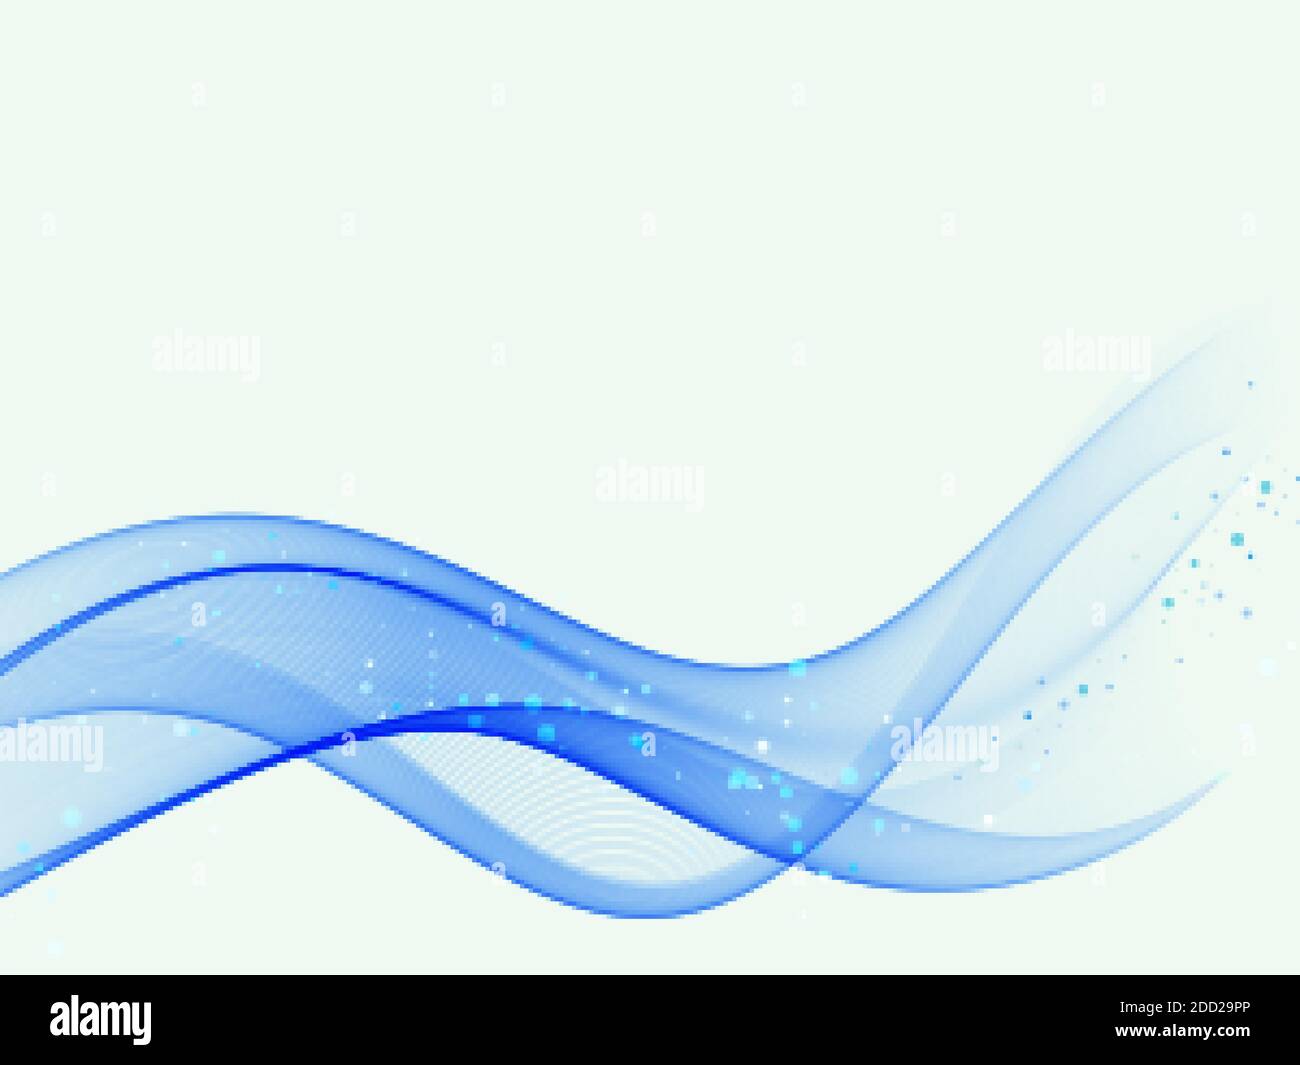 Abstrakter Hintergrund Vektor abstrakte blaue Welle.Wavy Linien, abstrakter Wasserfluss. Stock Vektor